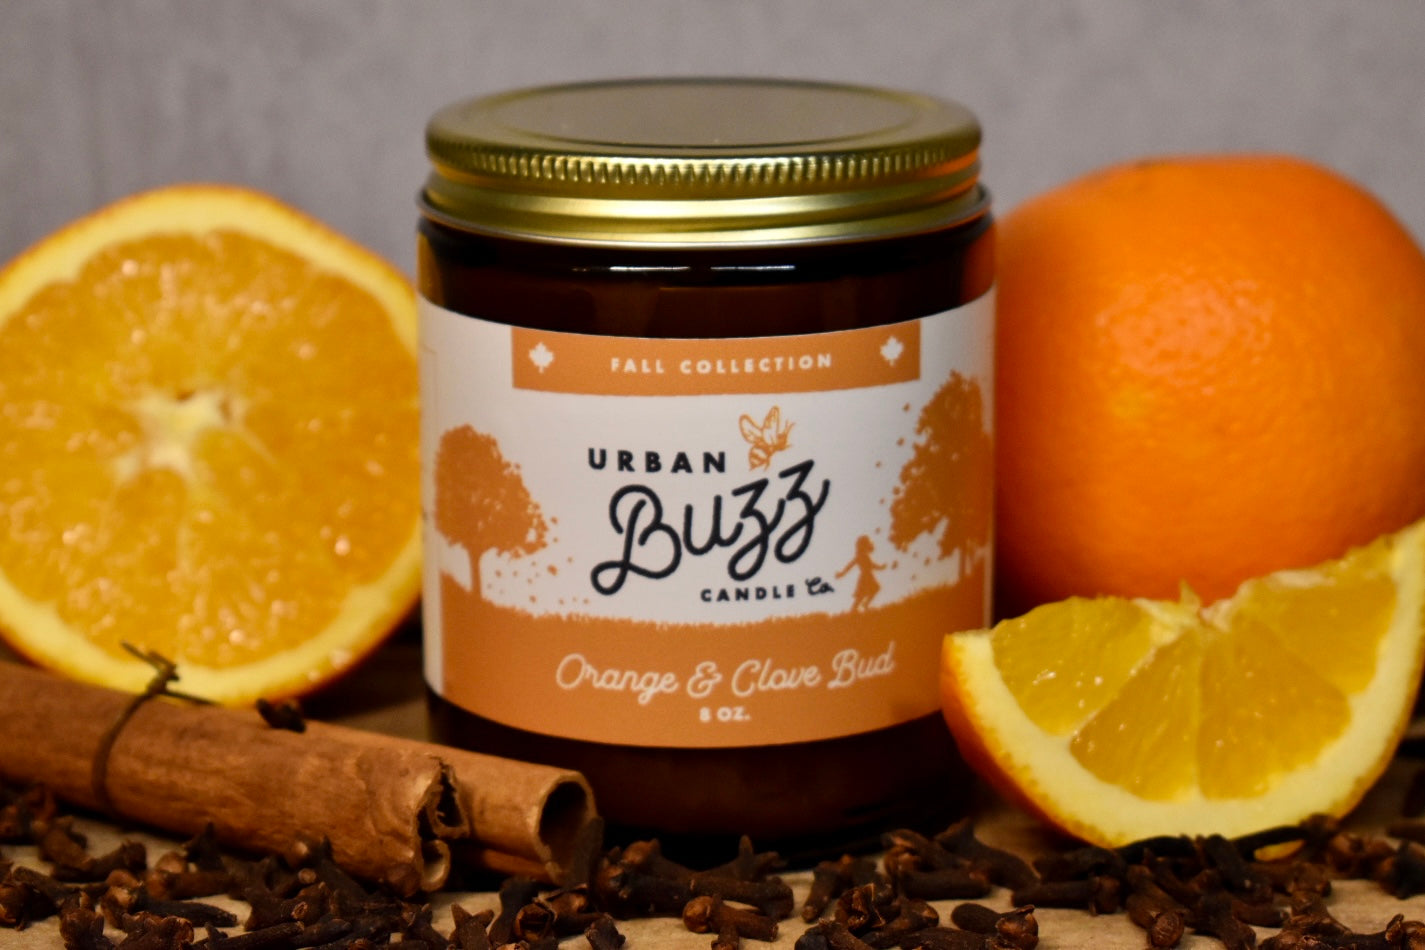 Orange & Clove 8 oz. Beeswax Jar Candle - Urban Buzz